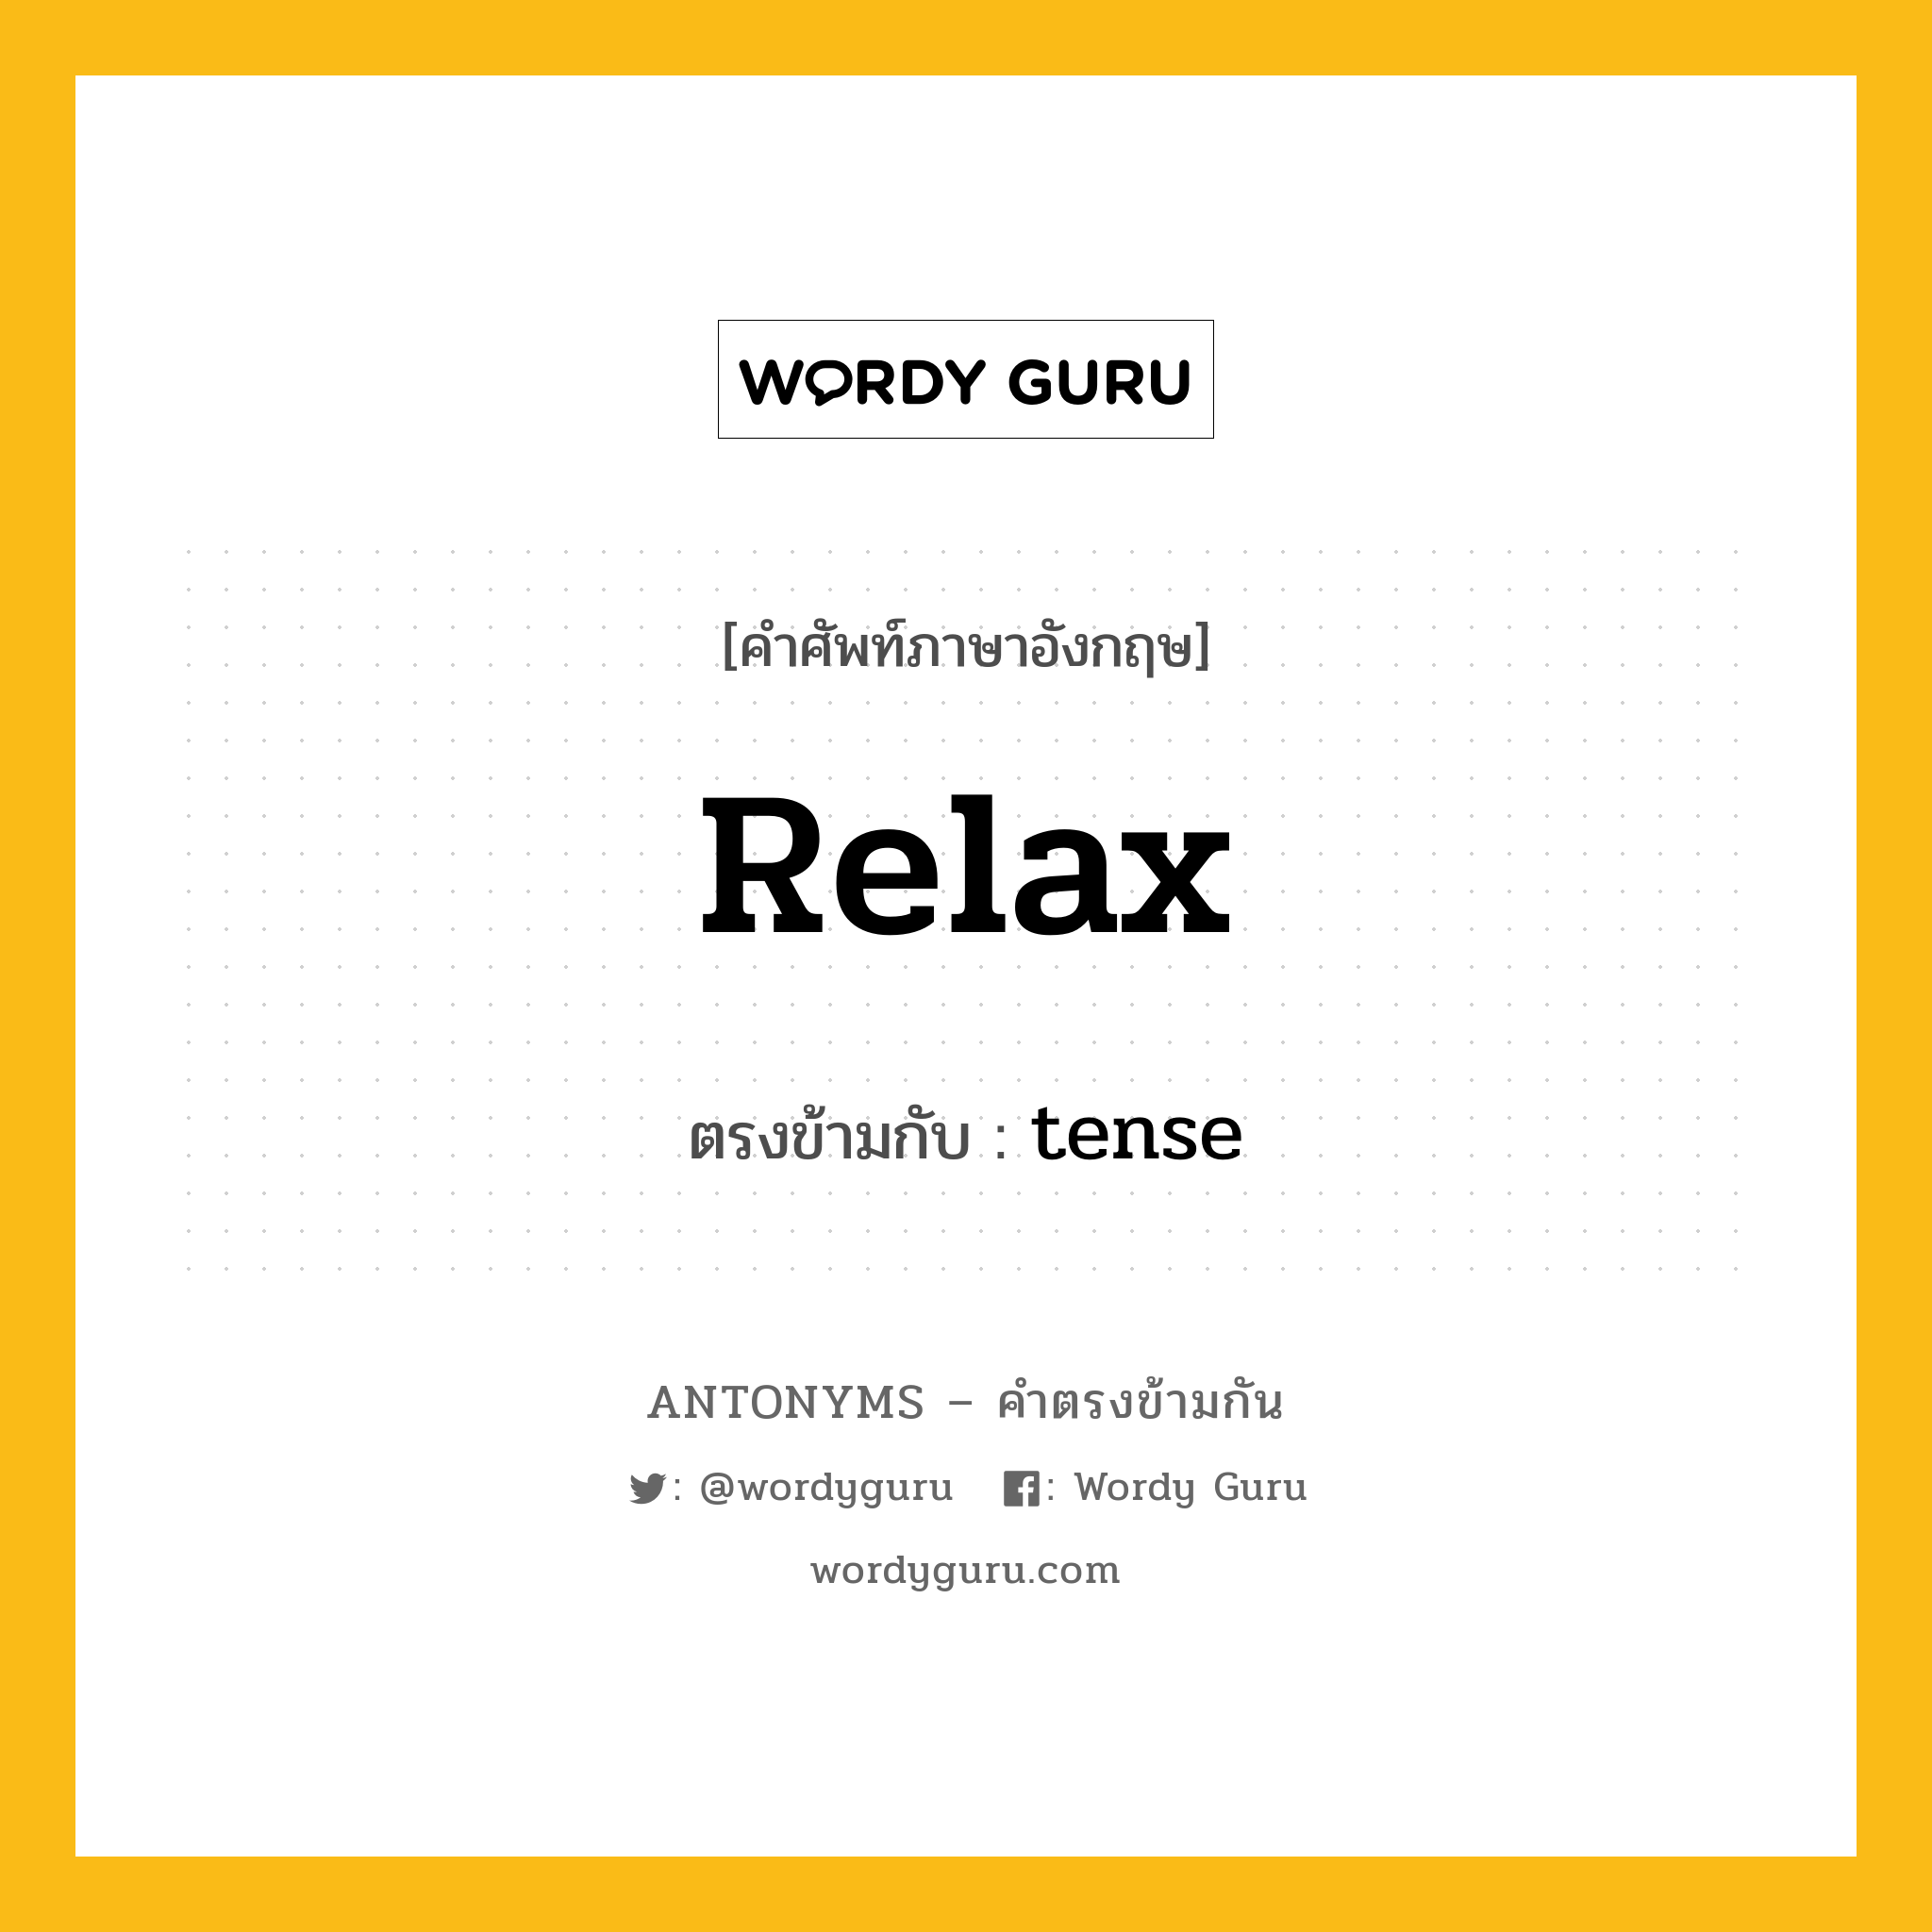 relax เป็นคำตรงข้ามกับคำไหนบ้าง?, คำศัพท์ภาษาอังกฤษ relax ตรงข้ามกับ tense หมวด tense